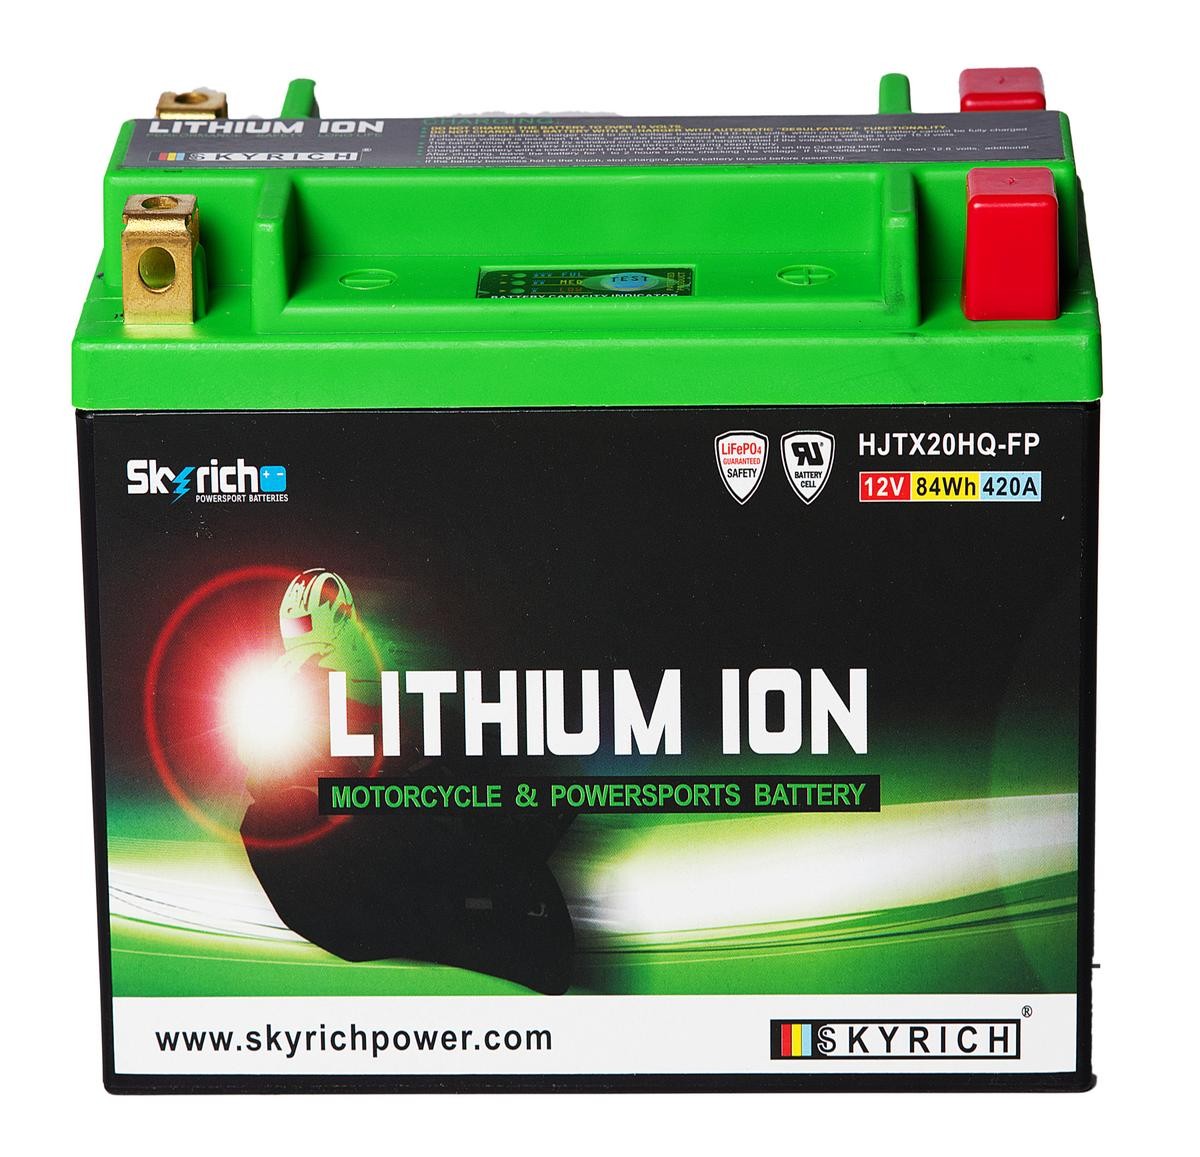 DUCATI 907 Batterie 12V 7Ah 420A N Li-Ionen-Batterie SKYRICH LITHIUM ION HJTX20HQ-FP